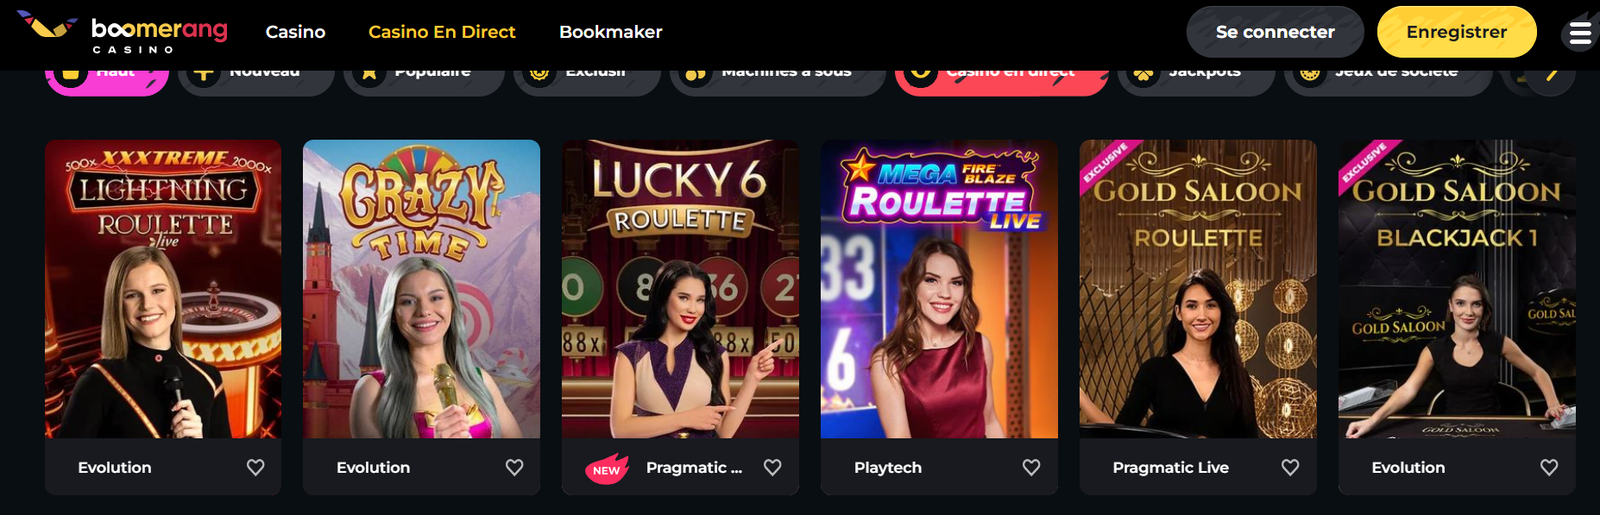 boomerang casino jeux en direct